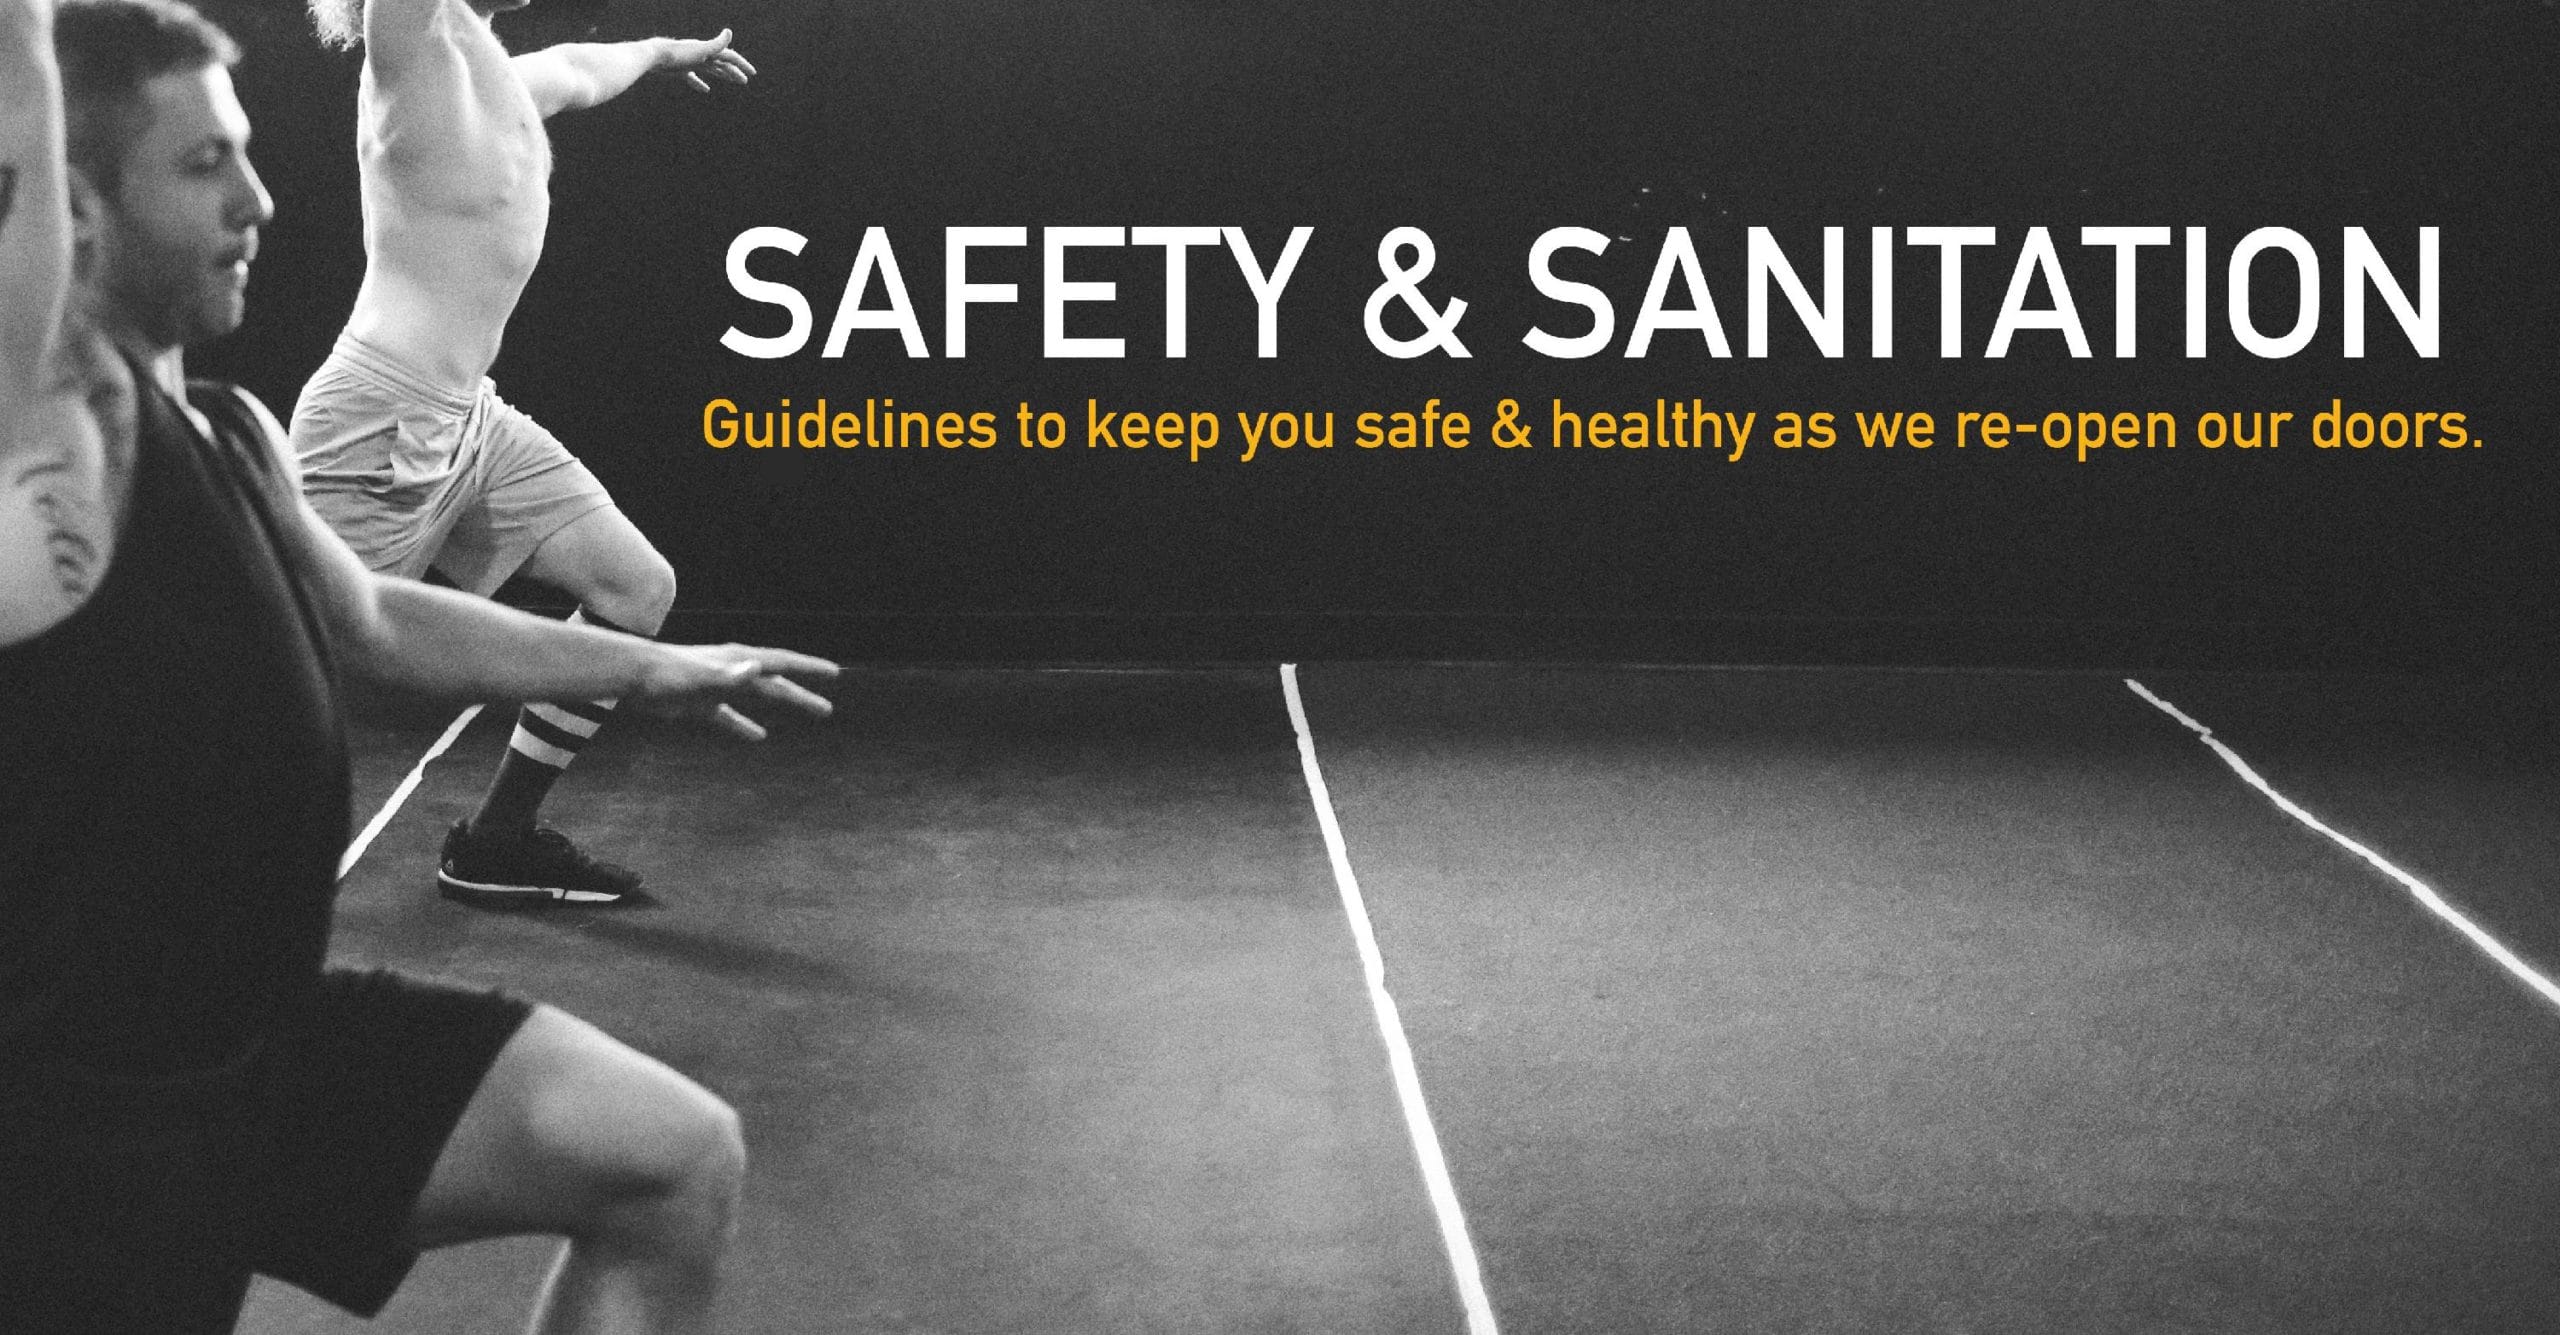 Safety & Sanitation at CrossFit Helix